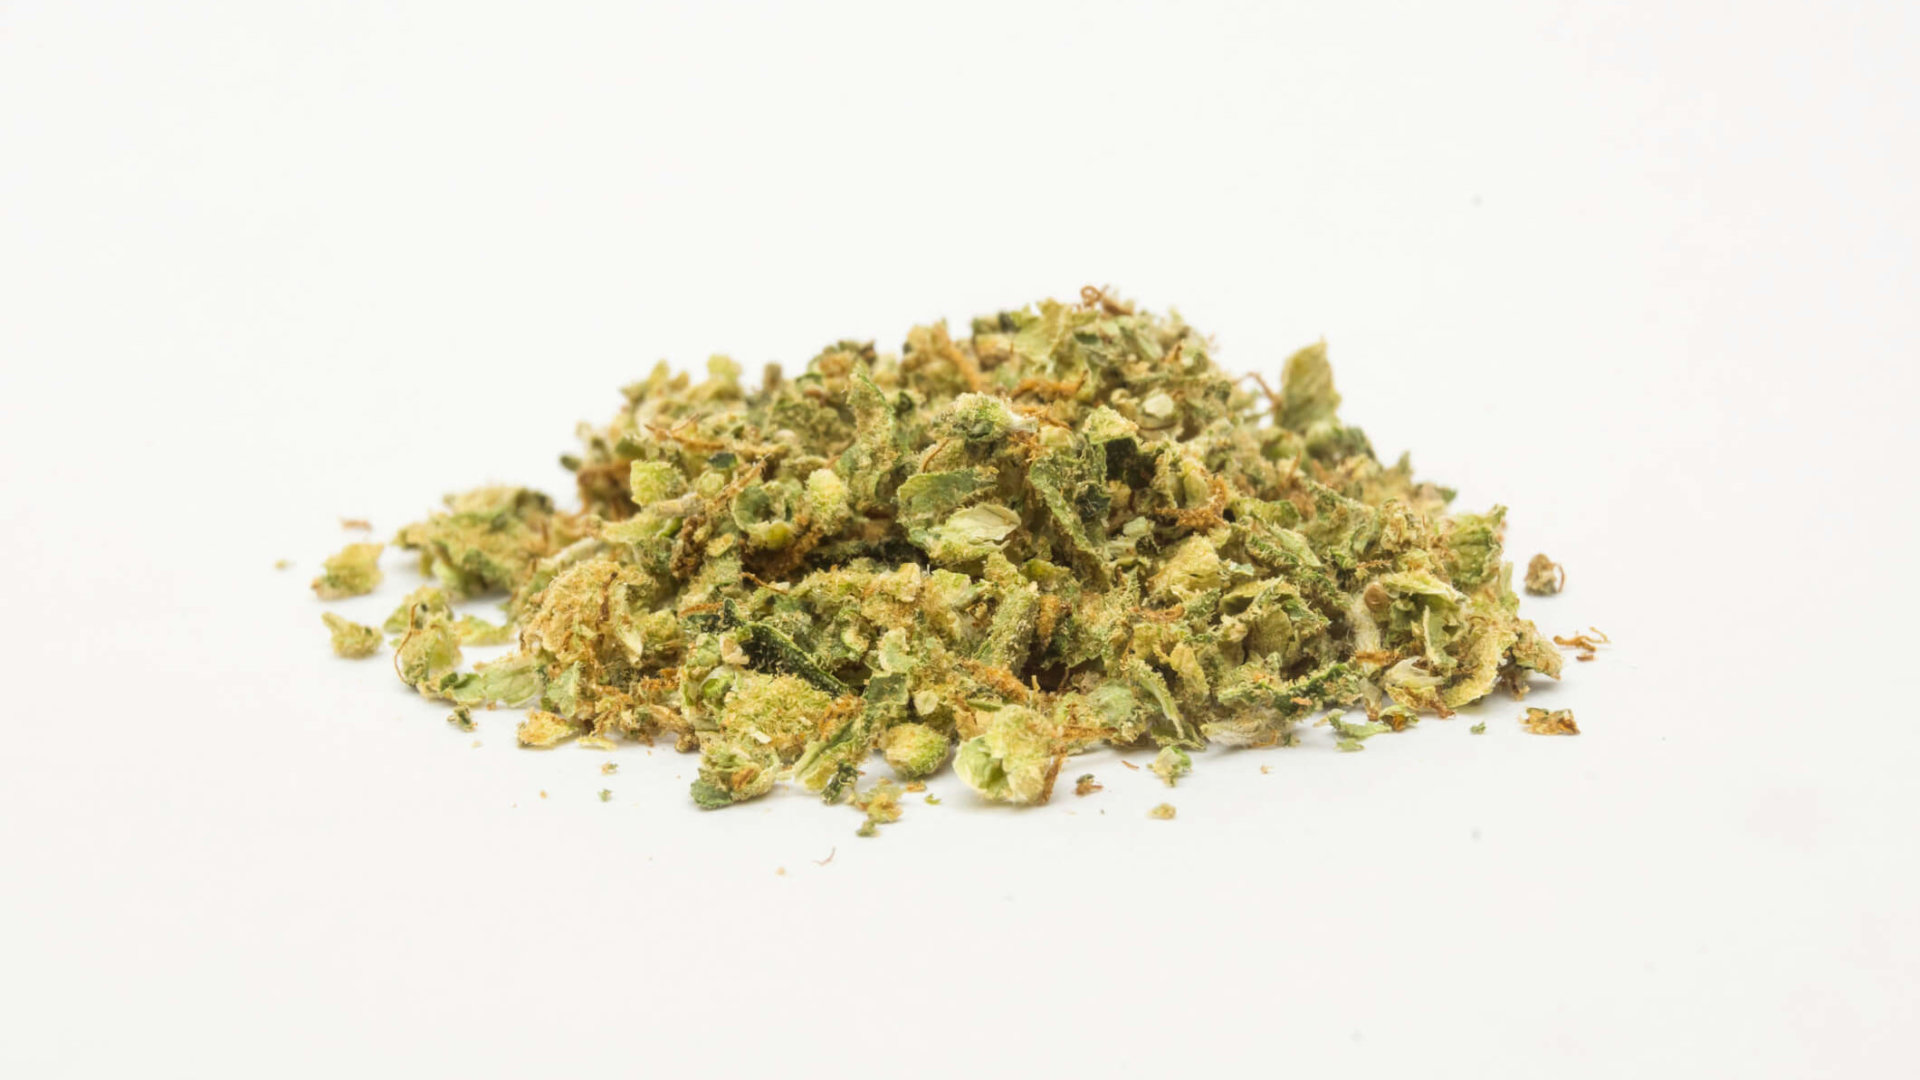 Small pile of ground marijuana on a white background